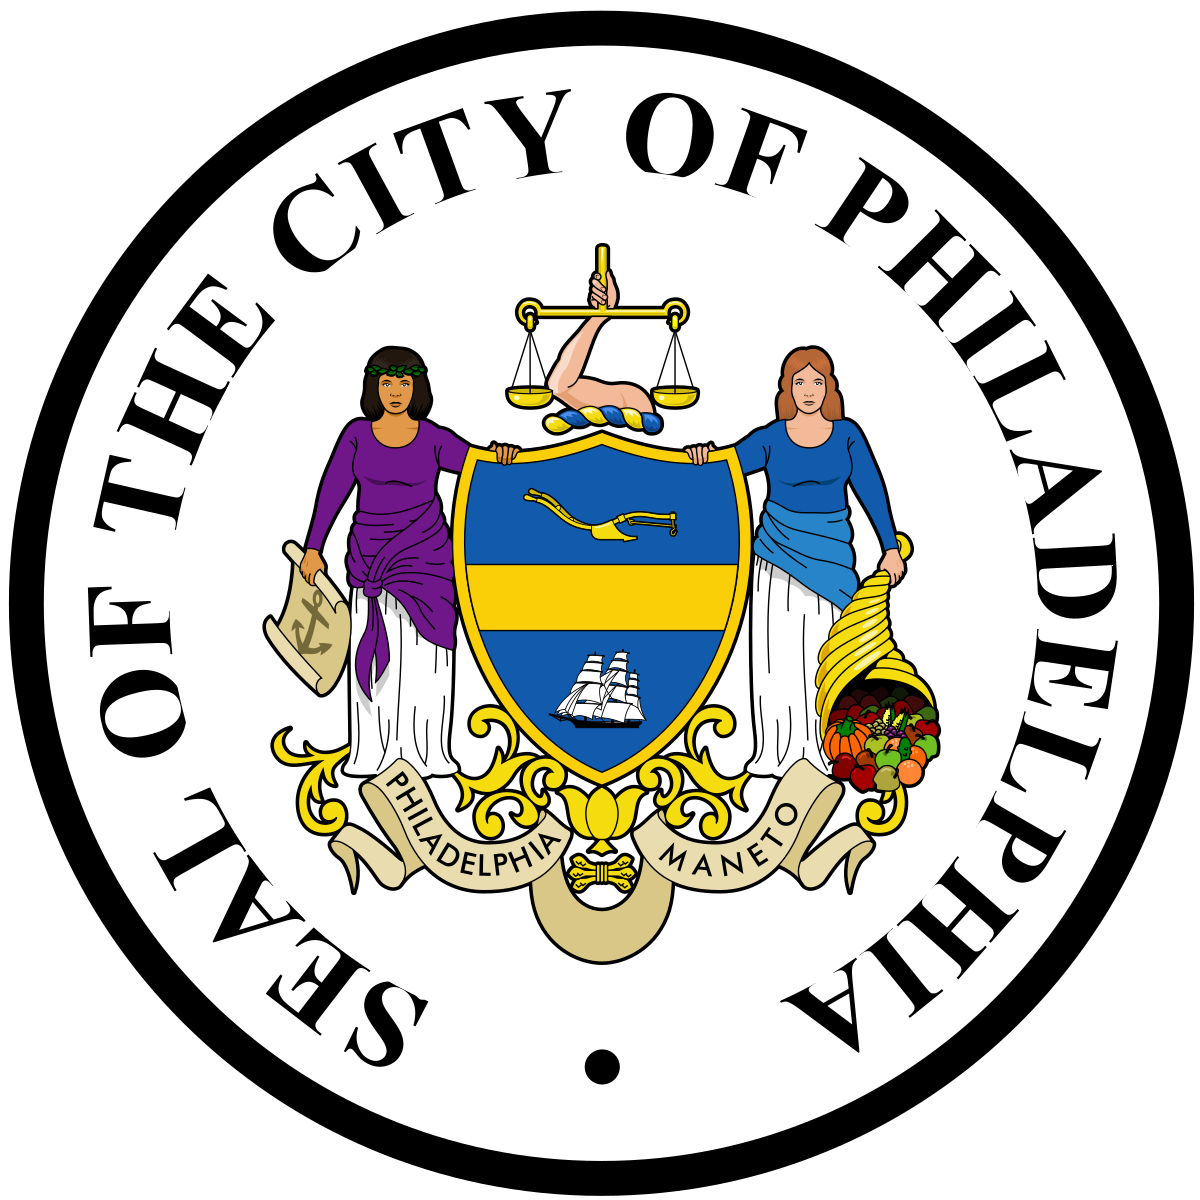 Philadelphia logo and seal